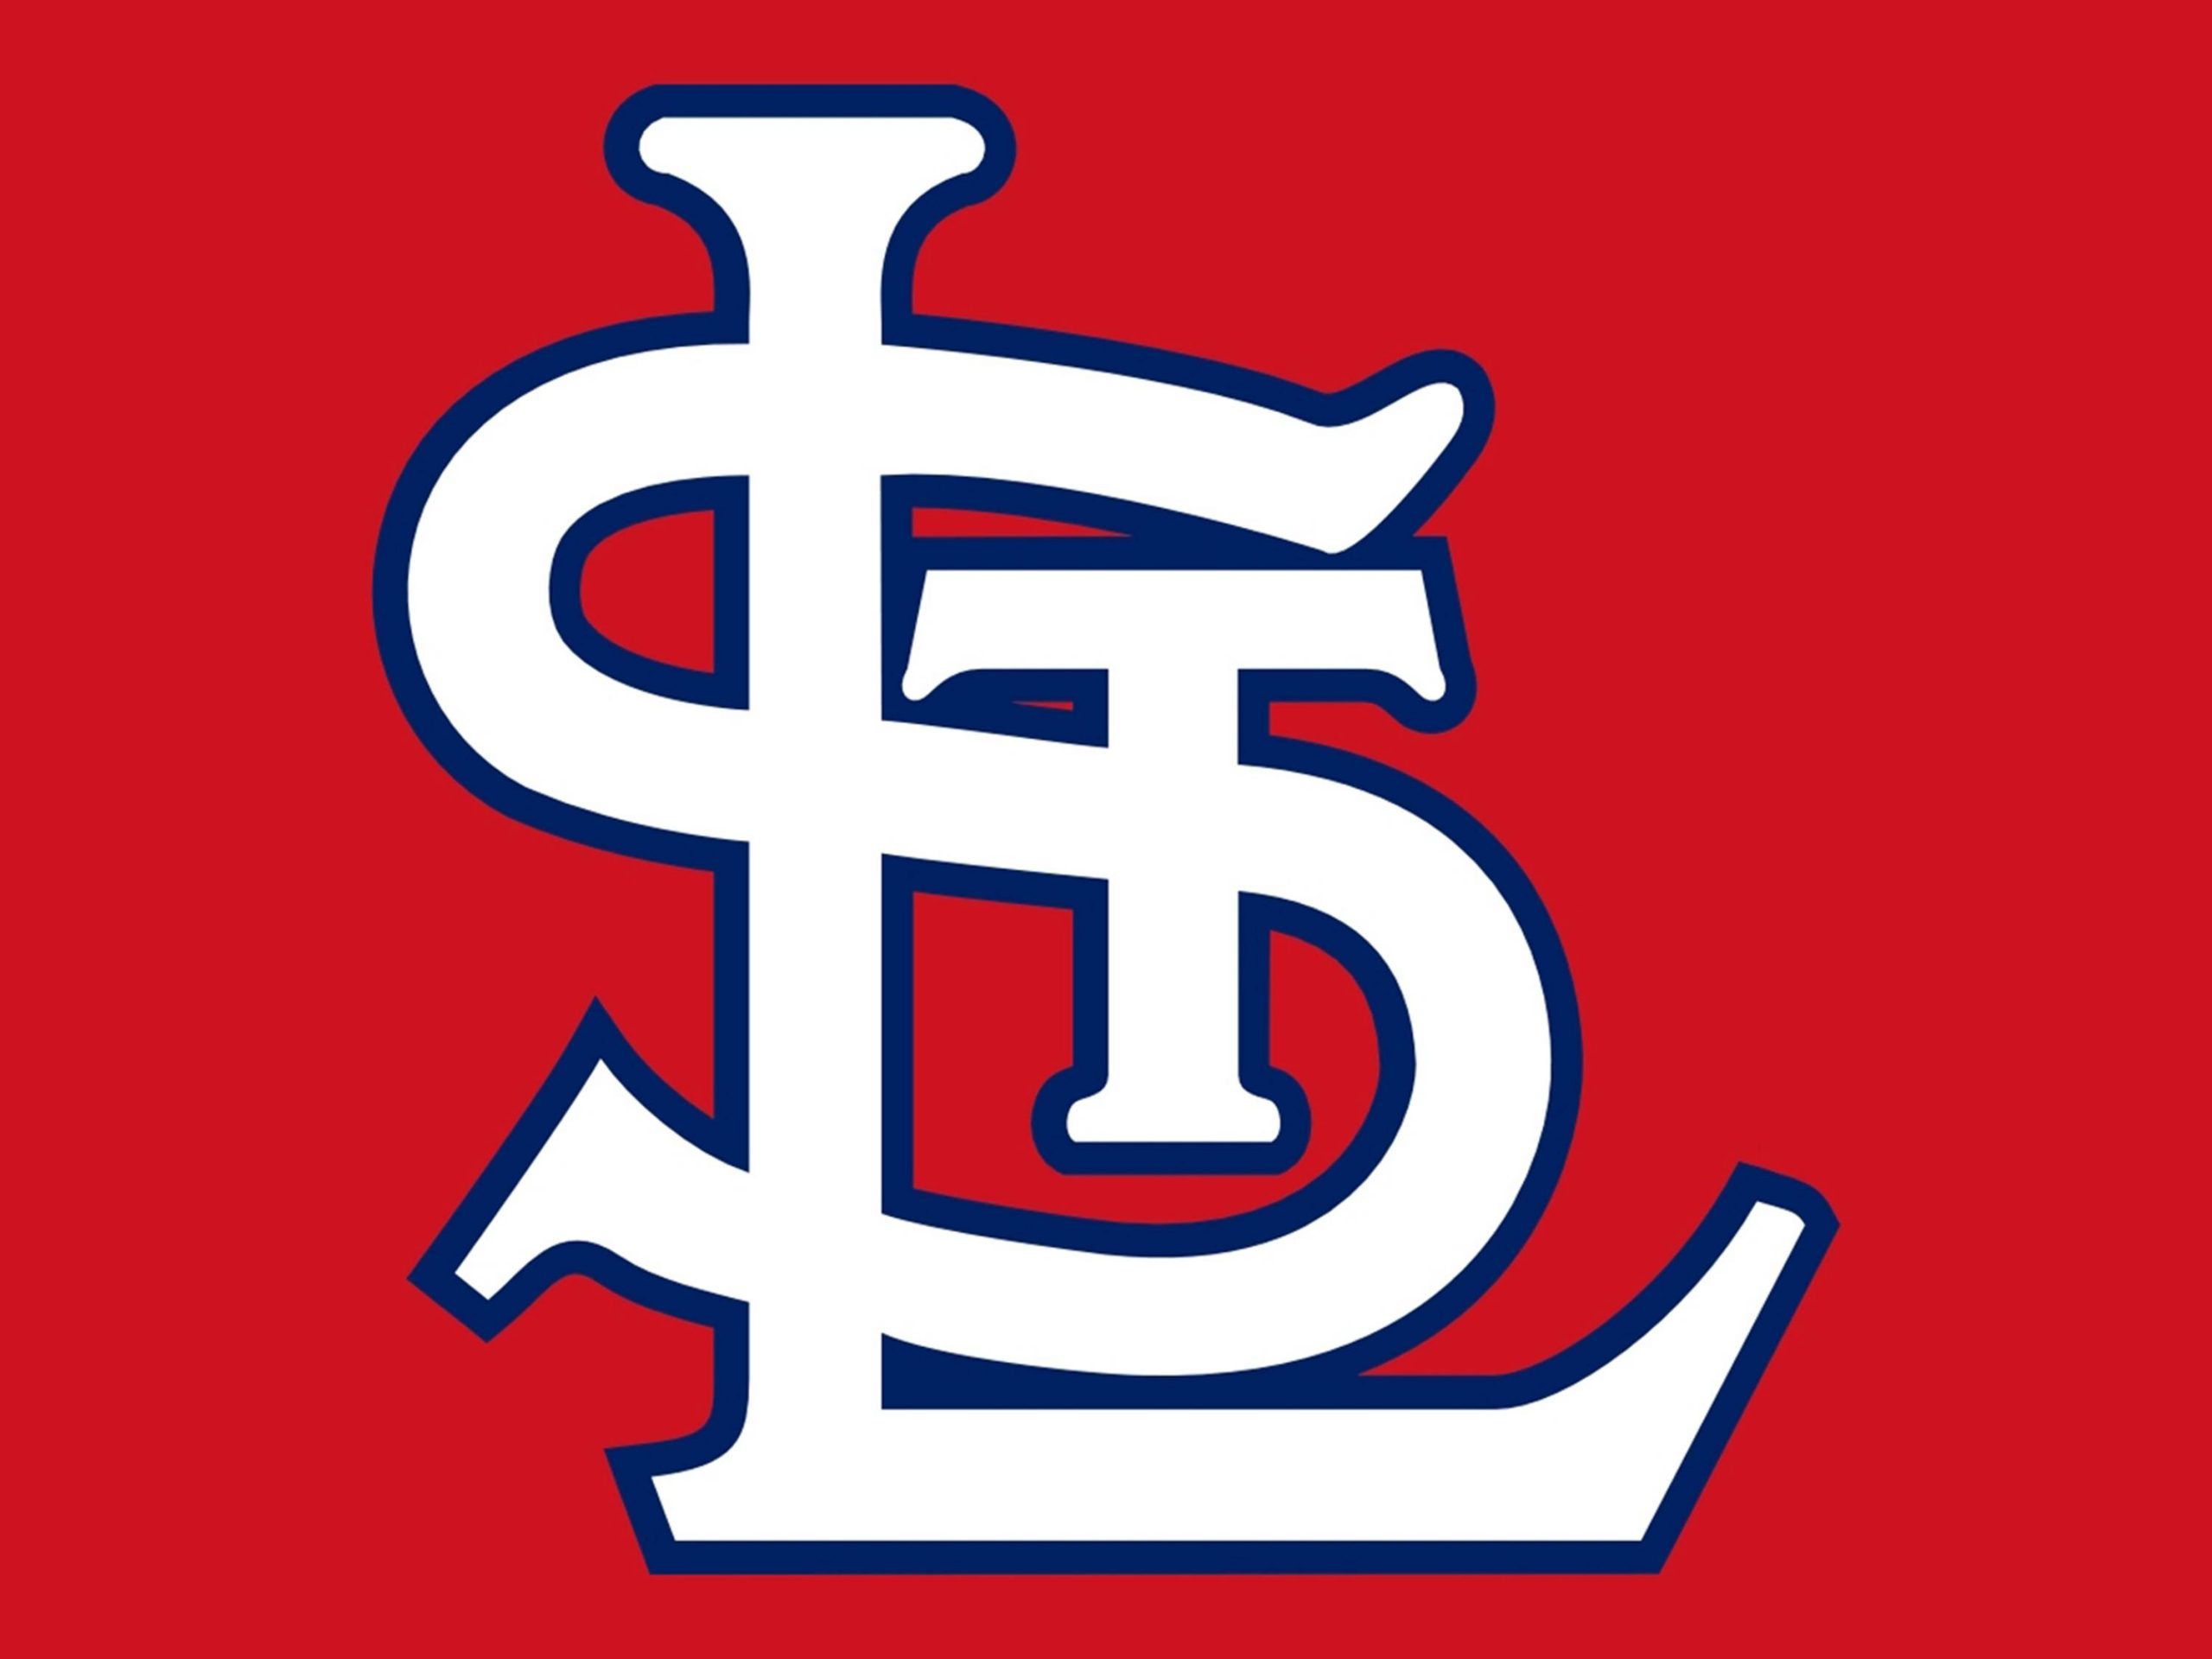 St. Louis Cardinals 2021 MLB schedule